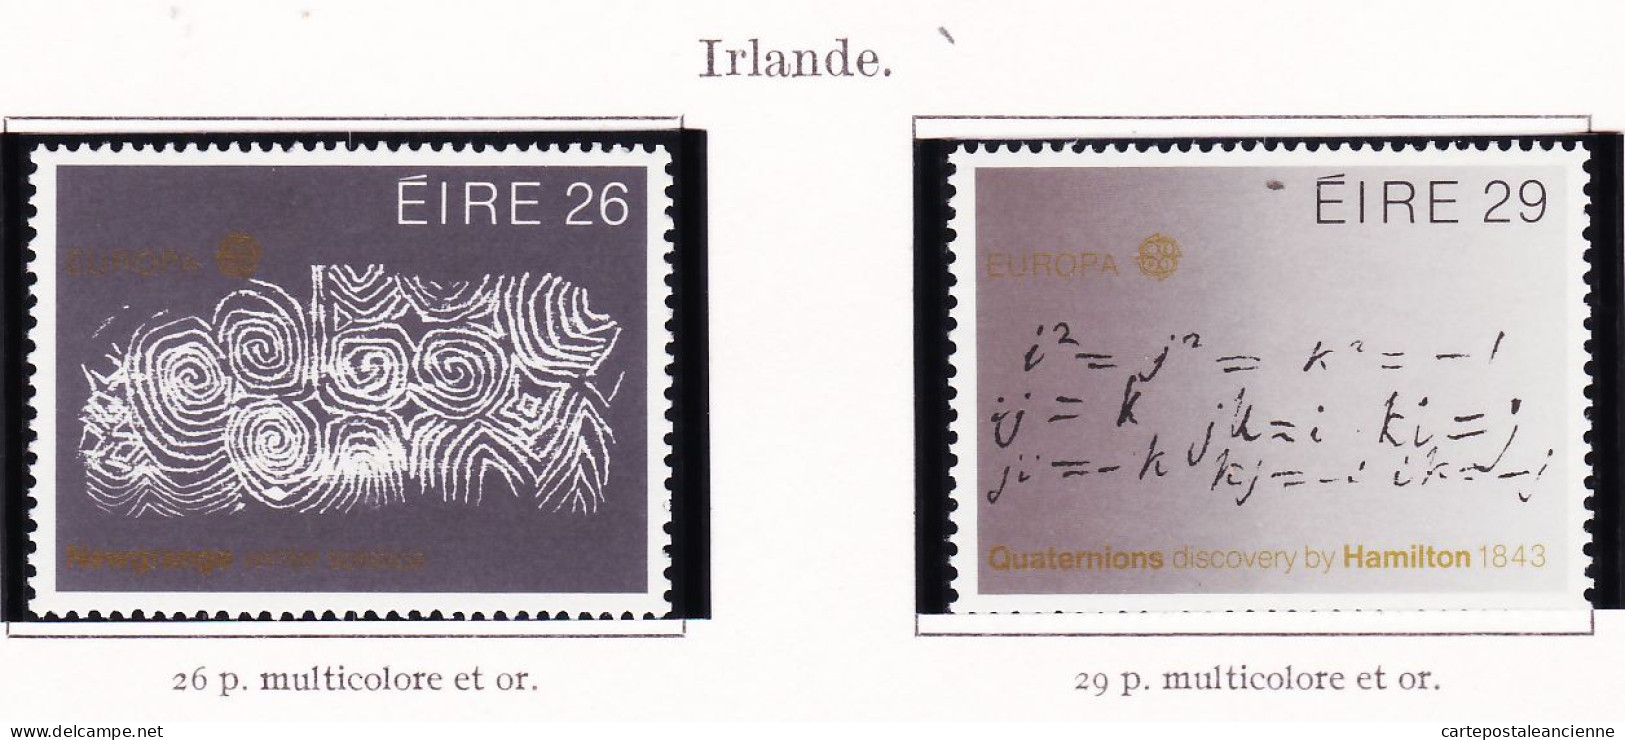 28267 / CEPT EUROPA 1983 EIRE Irlande Irland Yvert-Tellier N° 504 / 505  MICHEL N° 508 / 509  ** MNH C.E.P.T - 1983